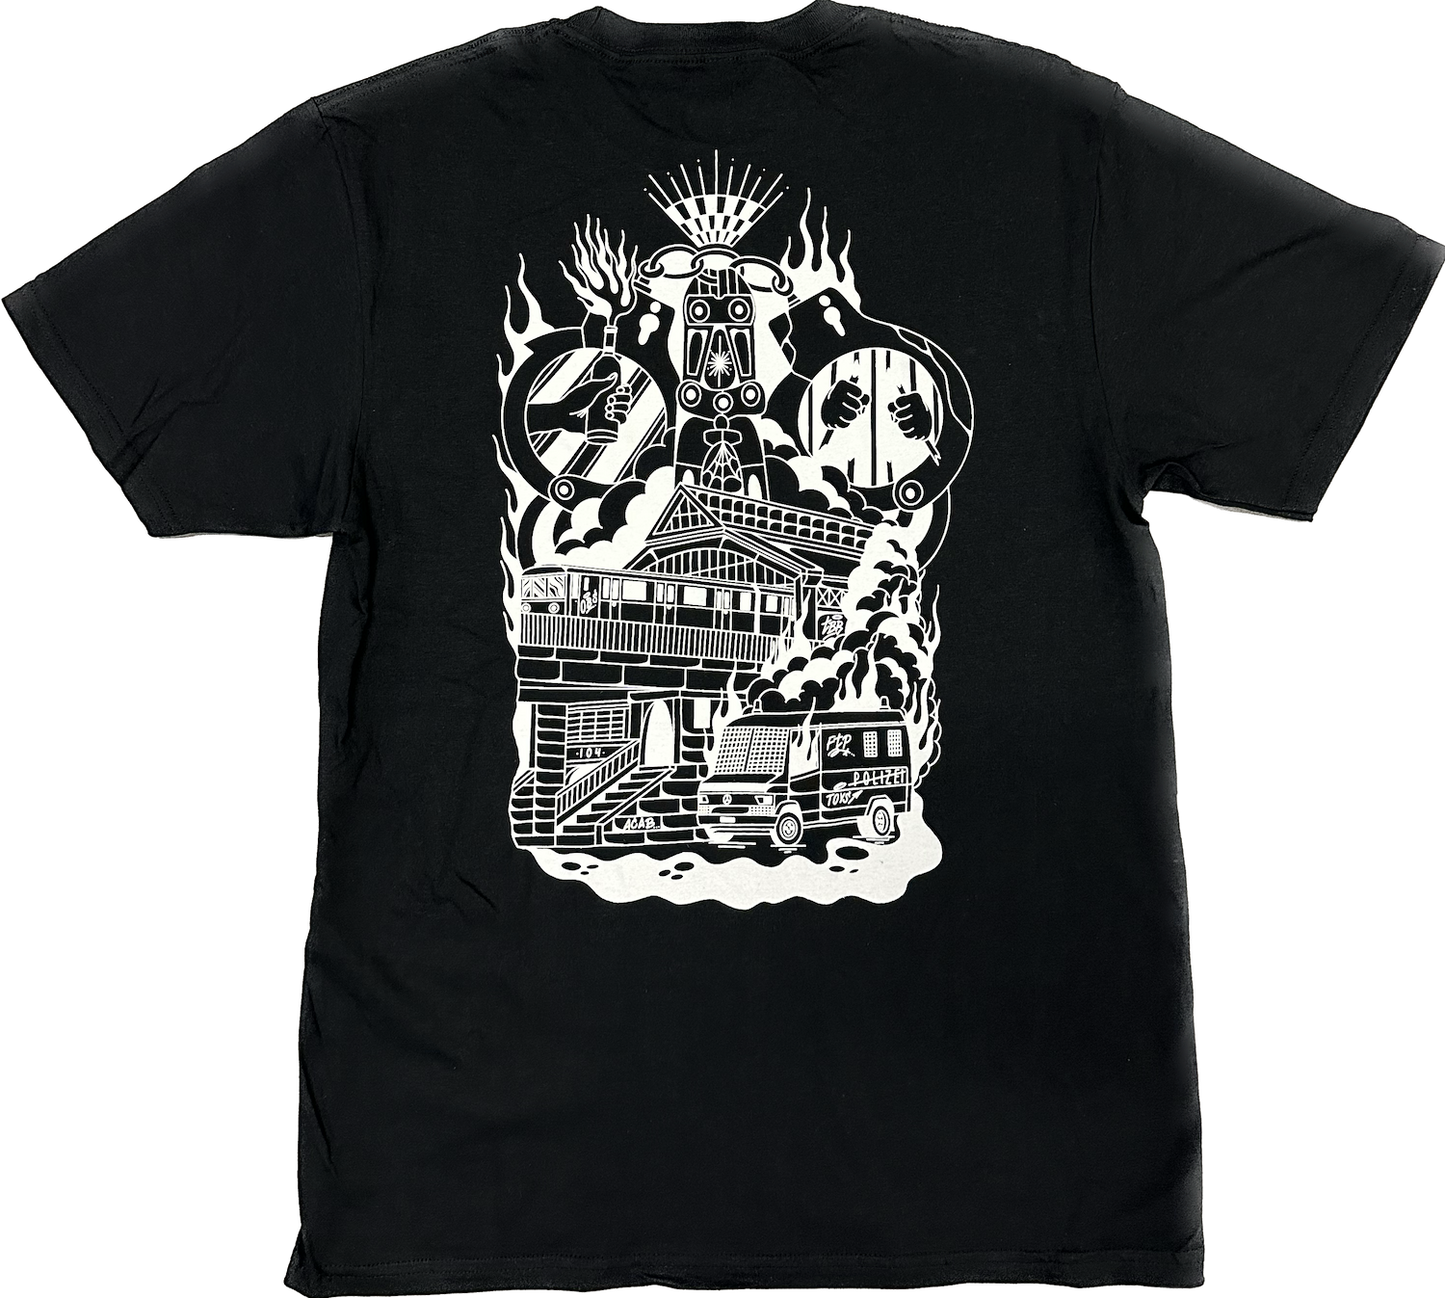 U-Bhf Eberswalder Shirt - schwarz